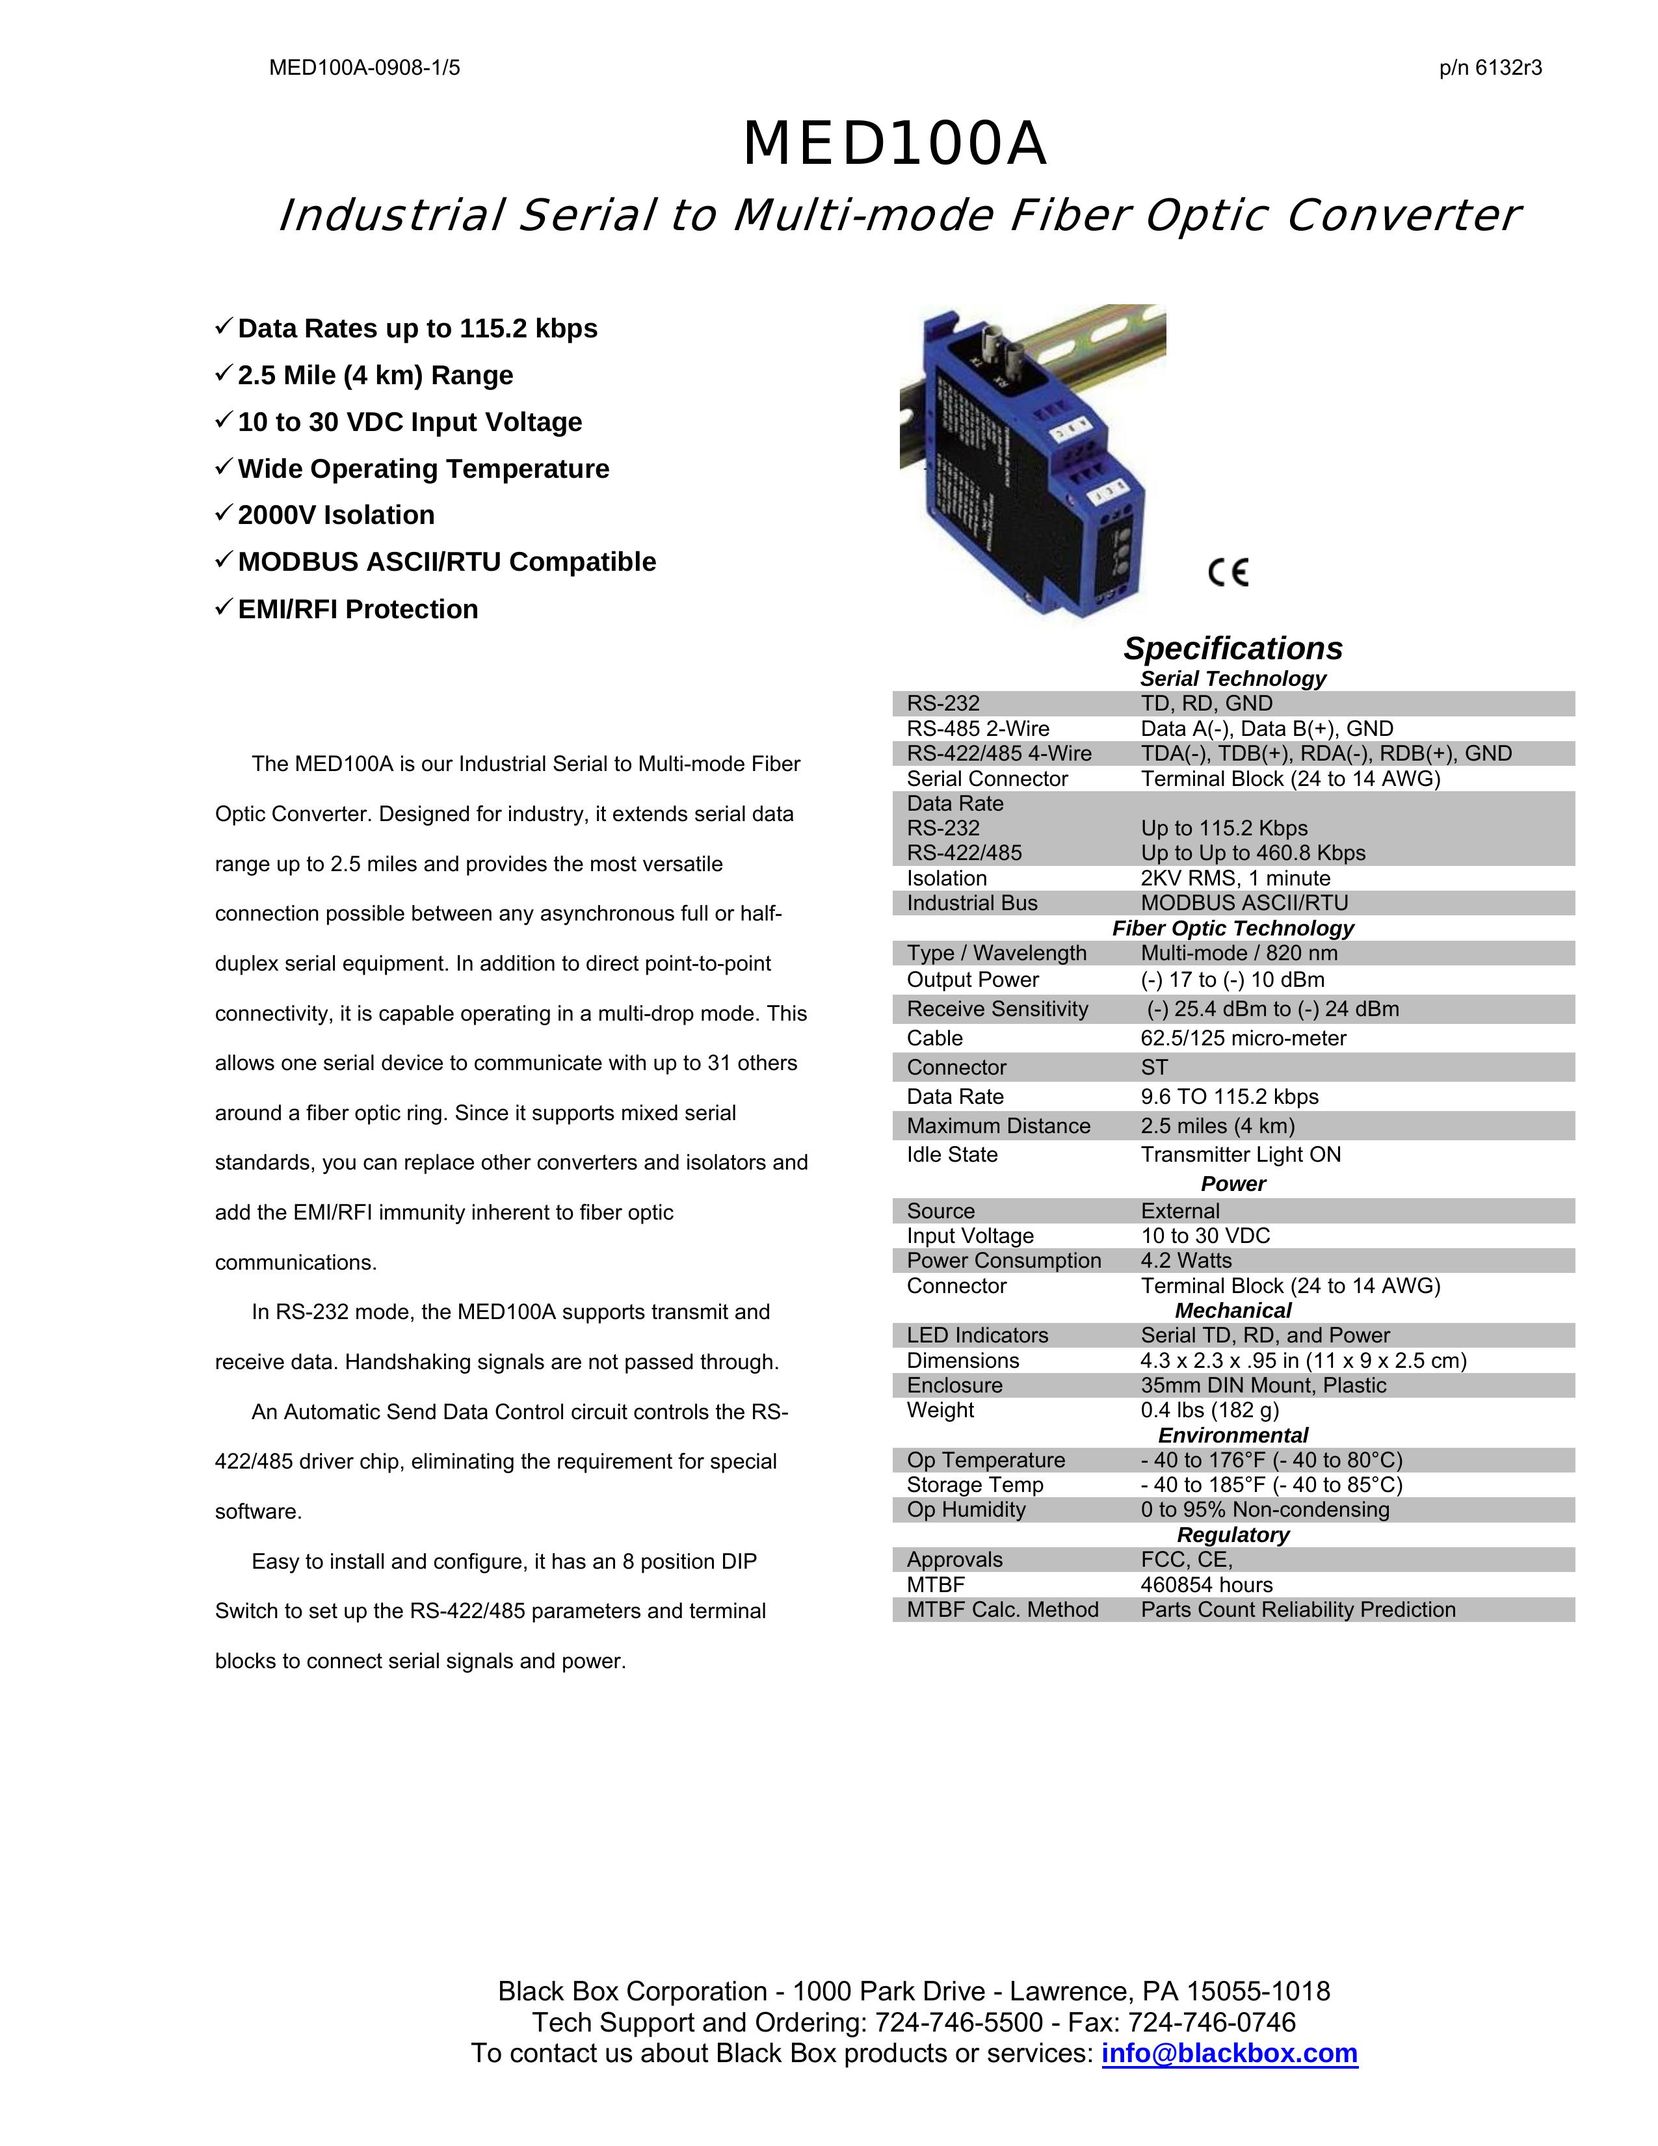 Black Box Industrial Serial to Multi-mode Fiber Optic Converter Electronic Accessory User Manual